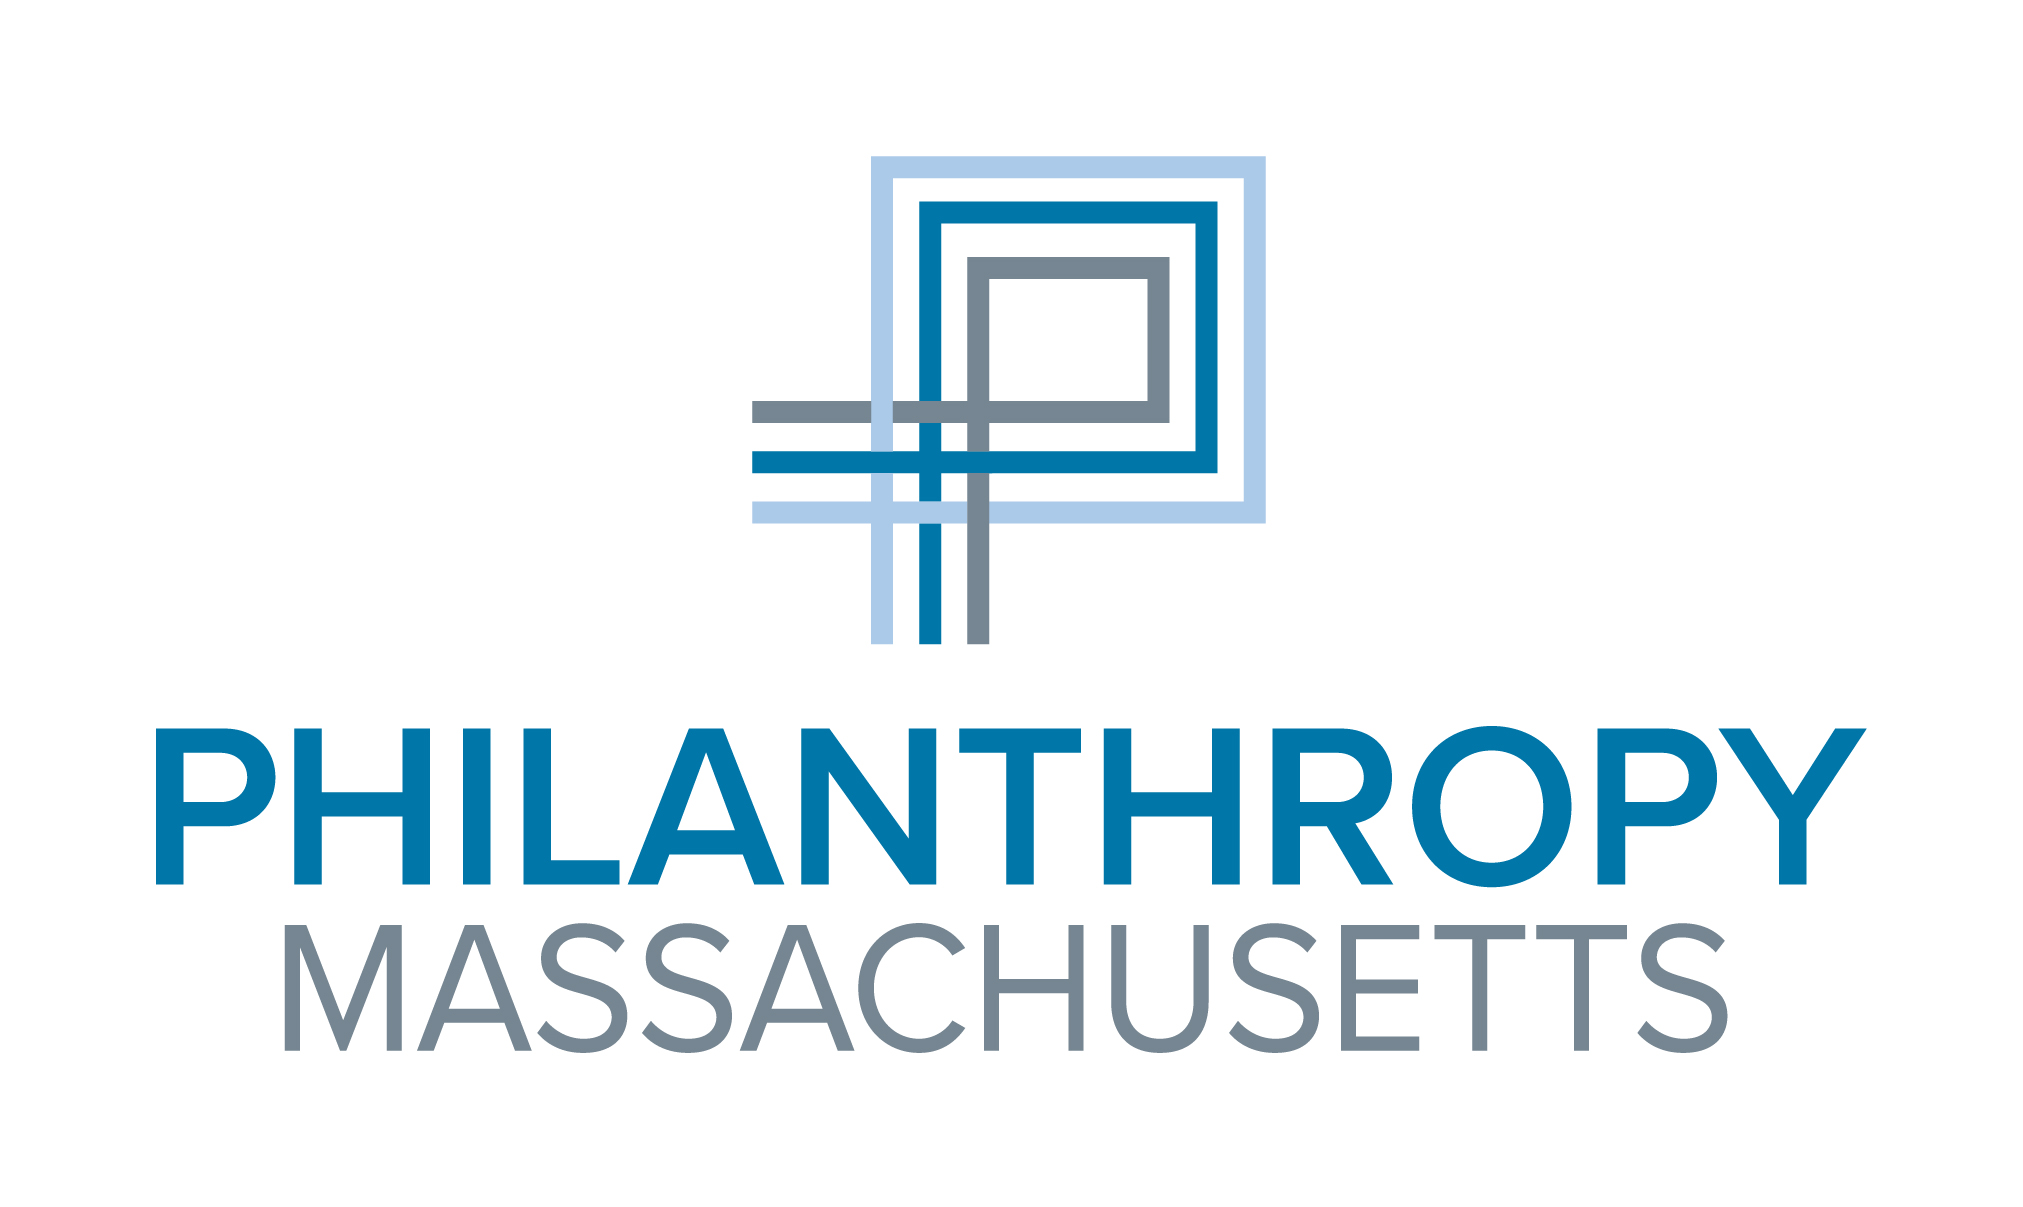 Philanthropy Massachusetts